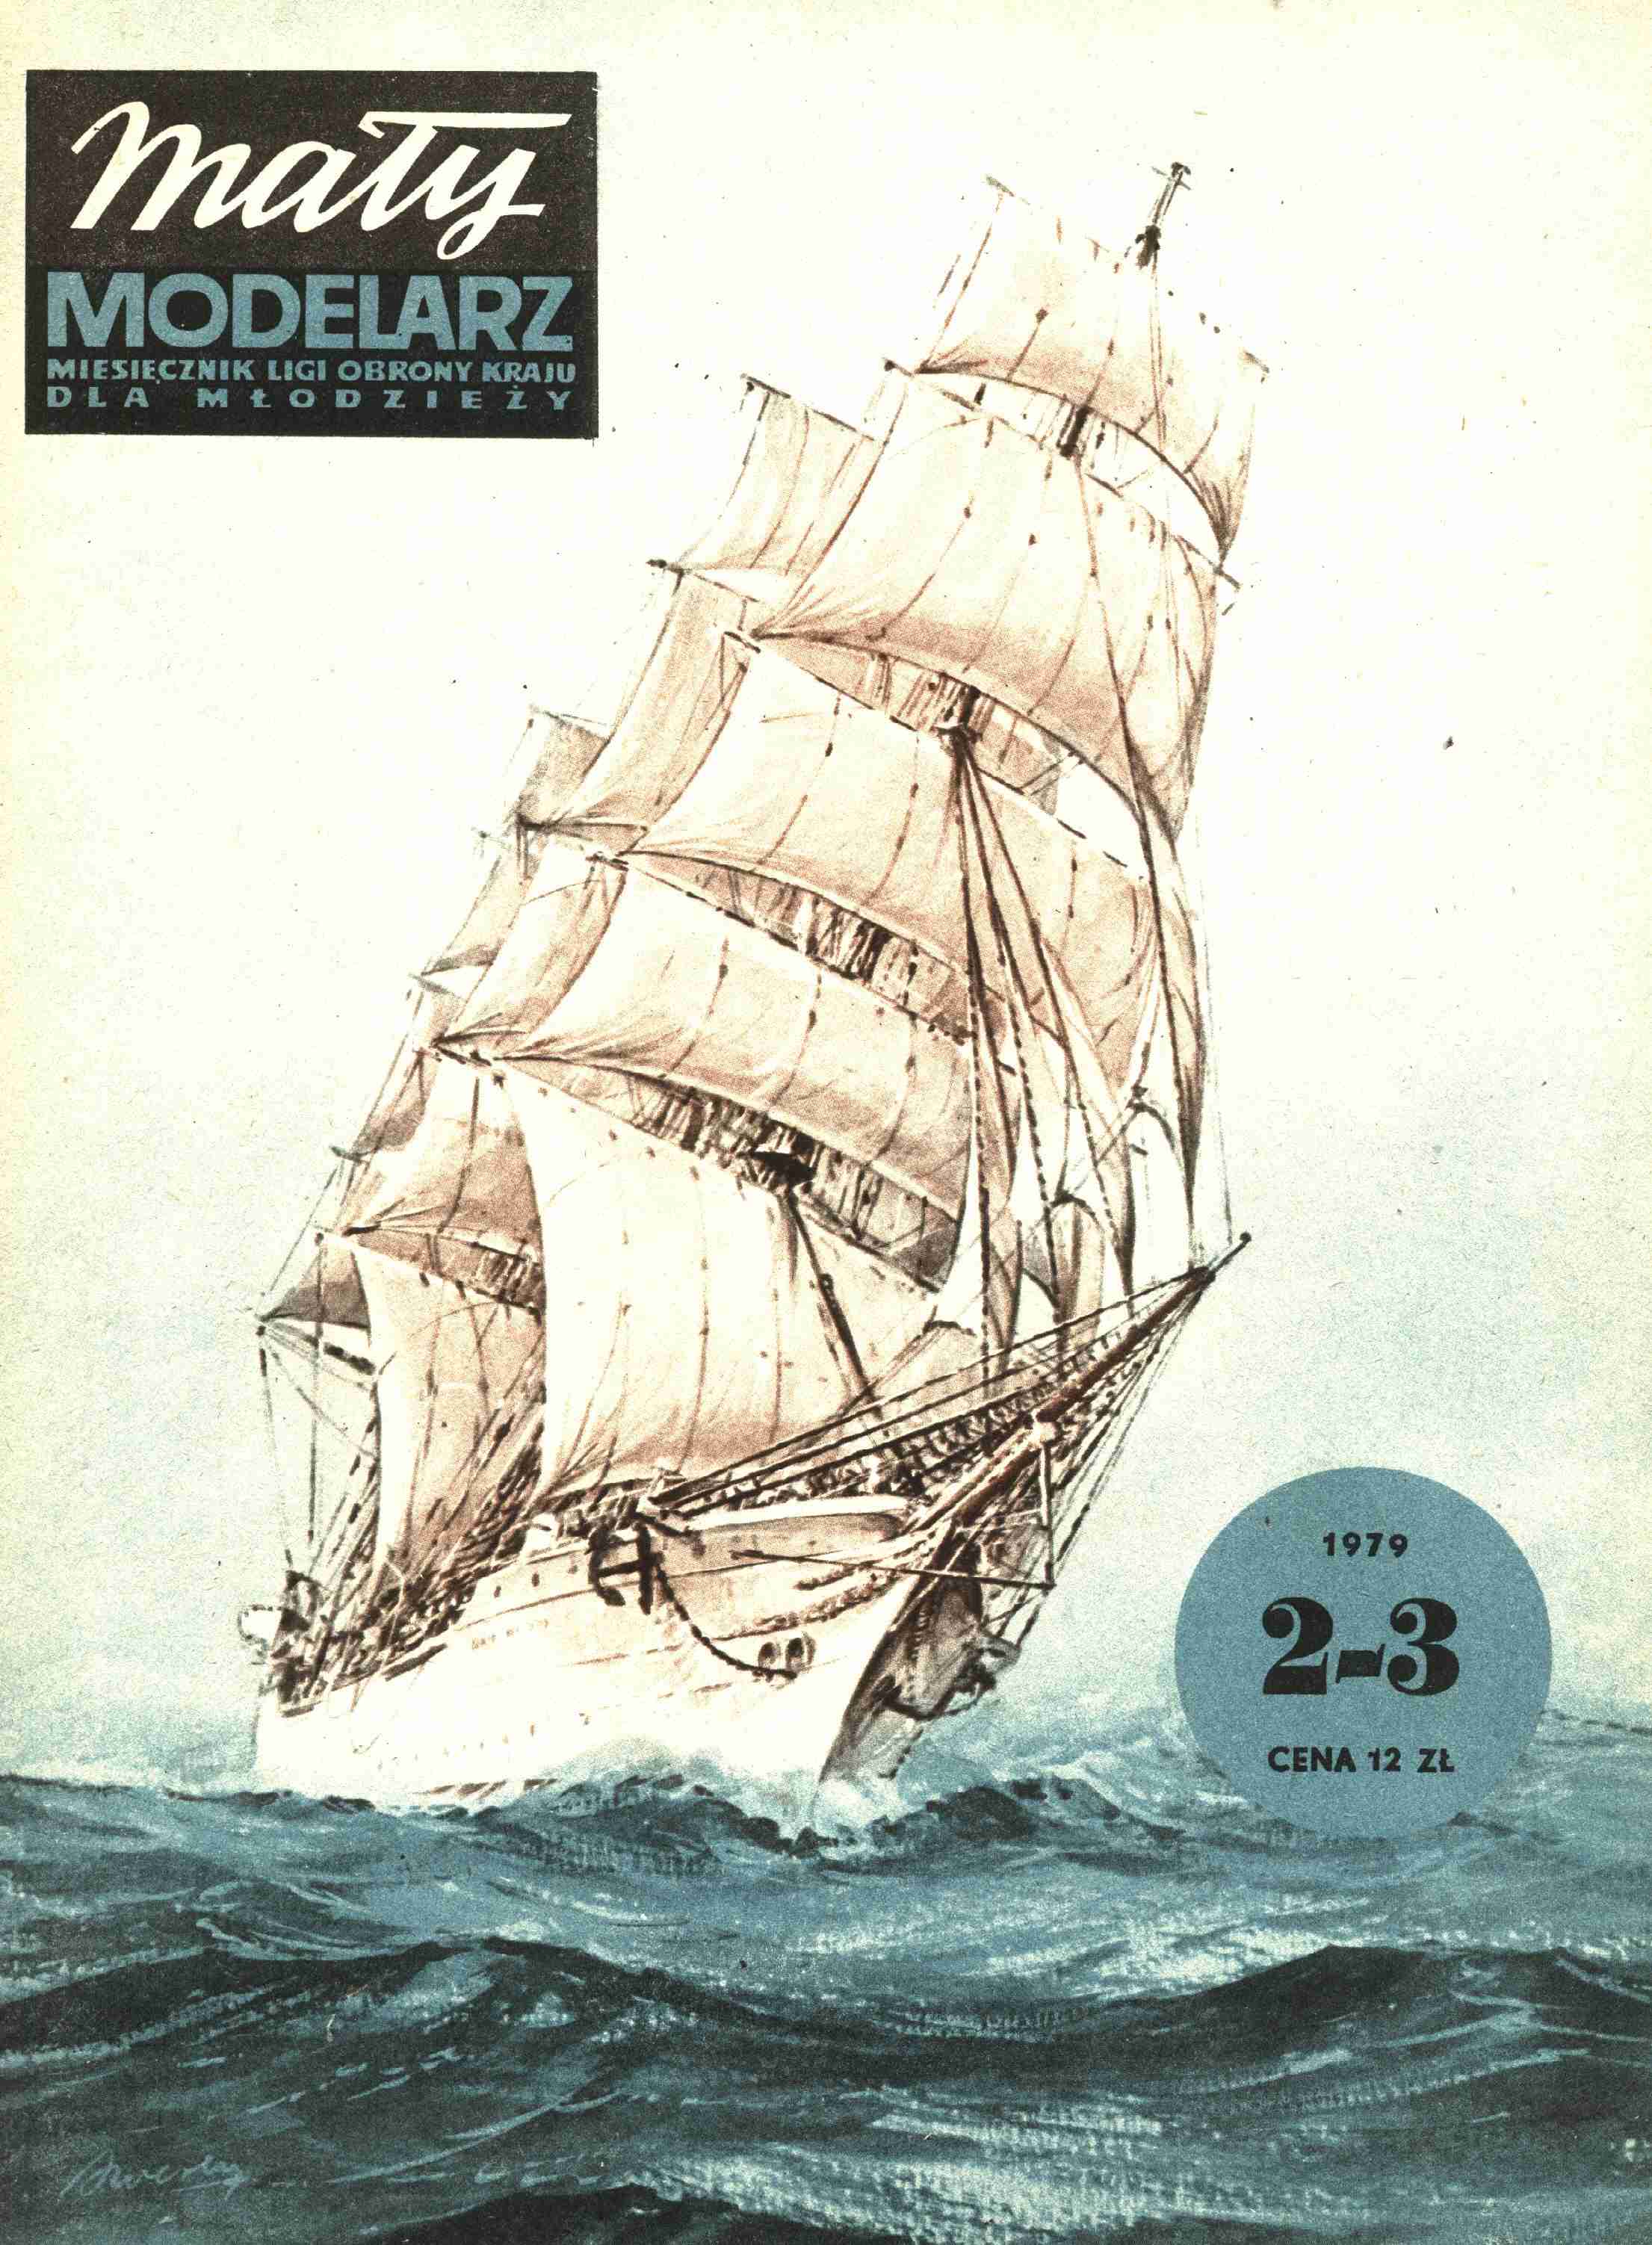 "Maly Modelarz" 2-3, 1979